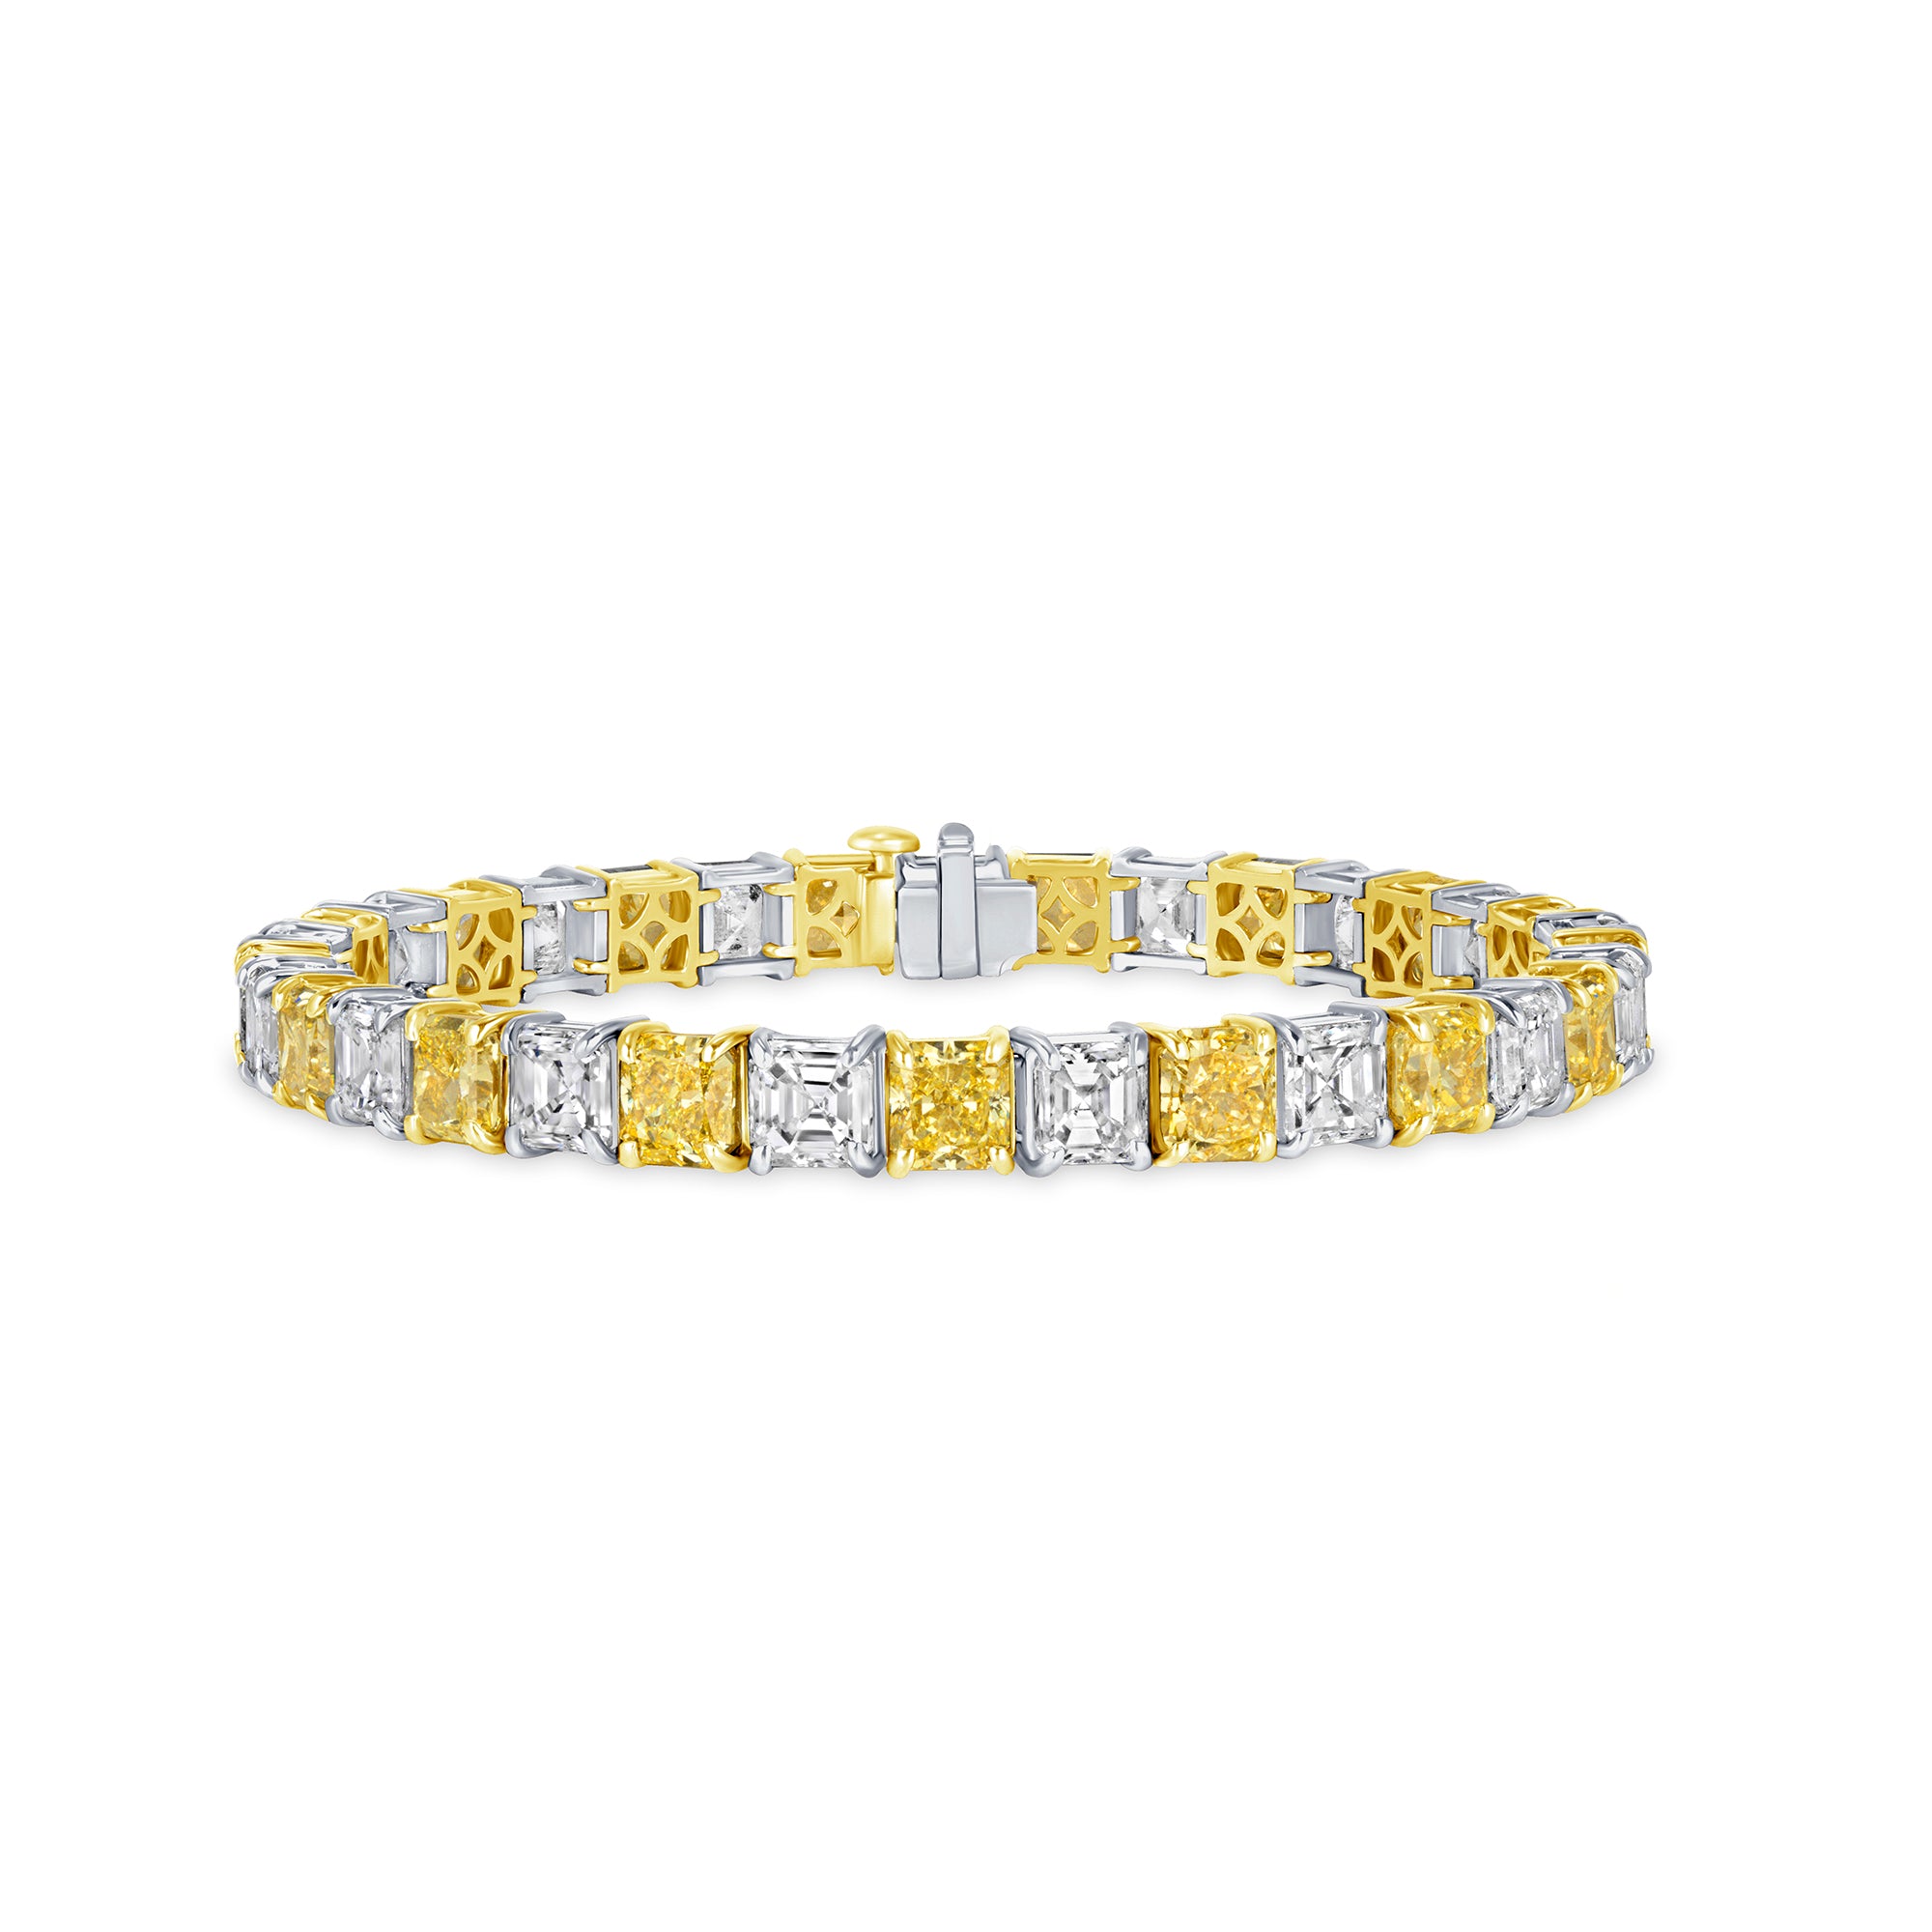 Alternating Radiant Cut Fancy Yellow and White Diamond Tennis Bracelet in 18 Karat Yellow Gold and Platinum